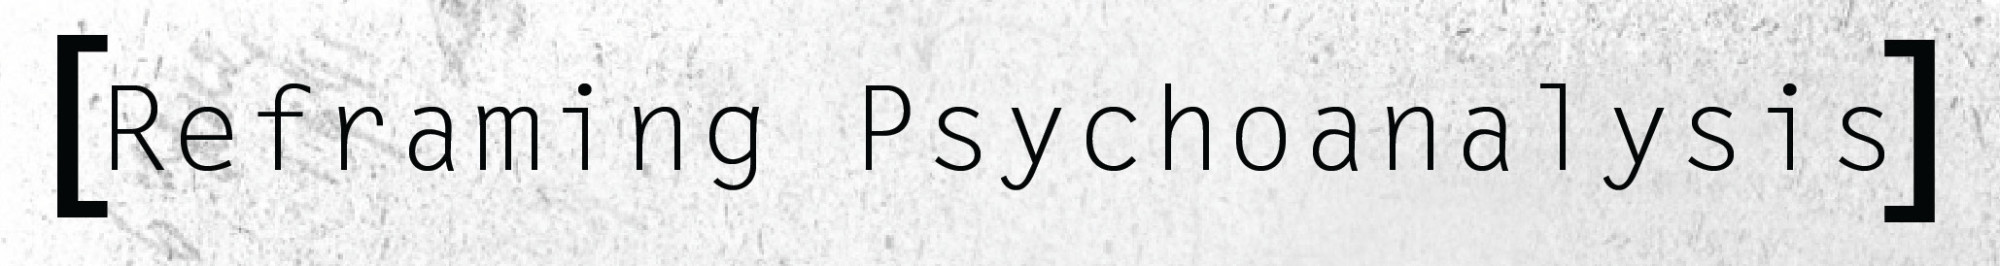 REFRAMING PSYCHOANALYSIS